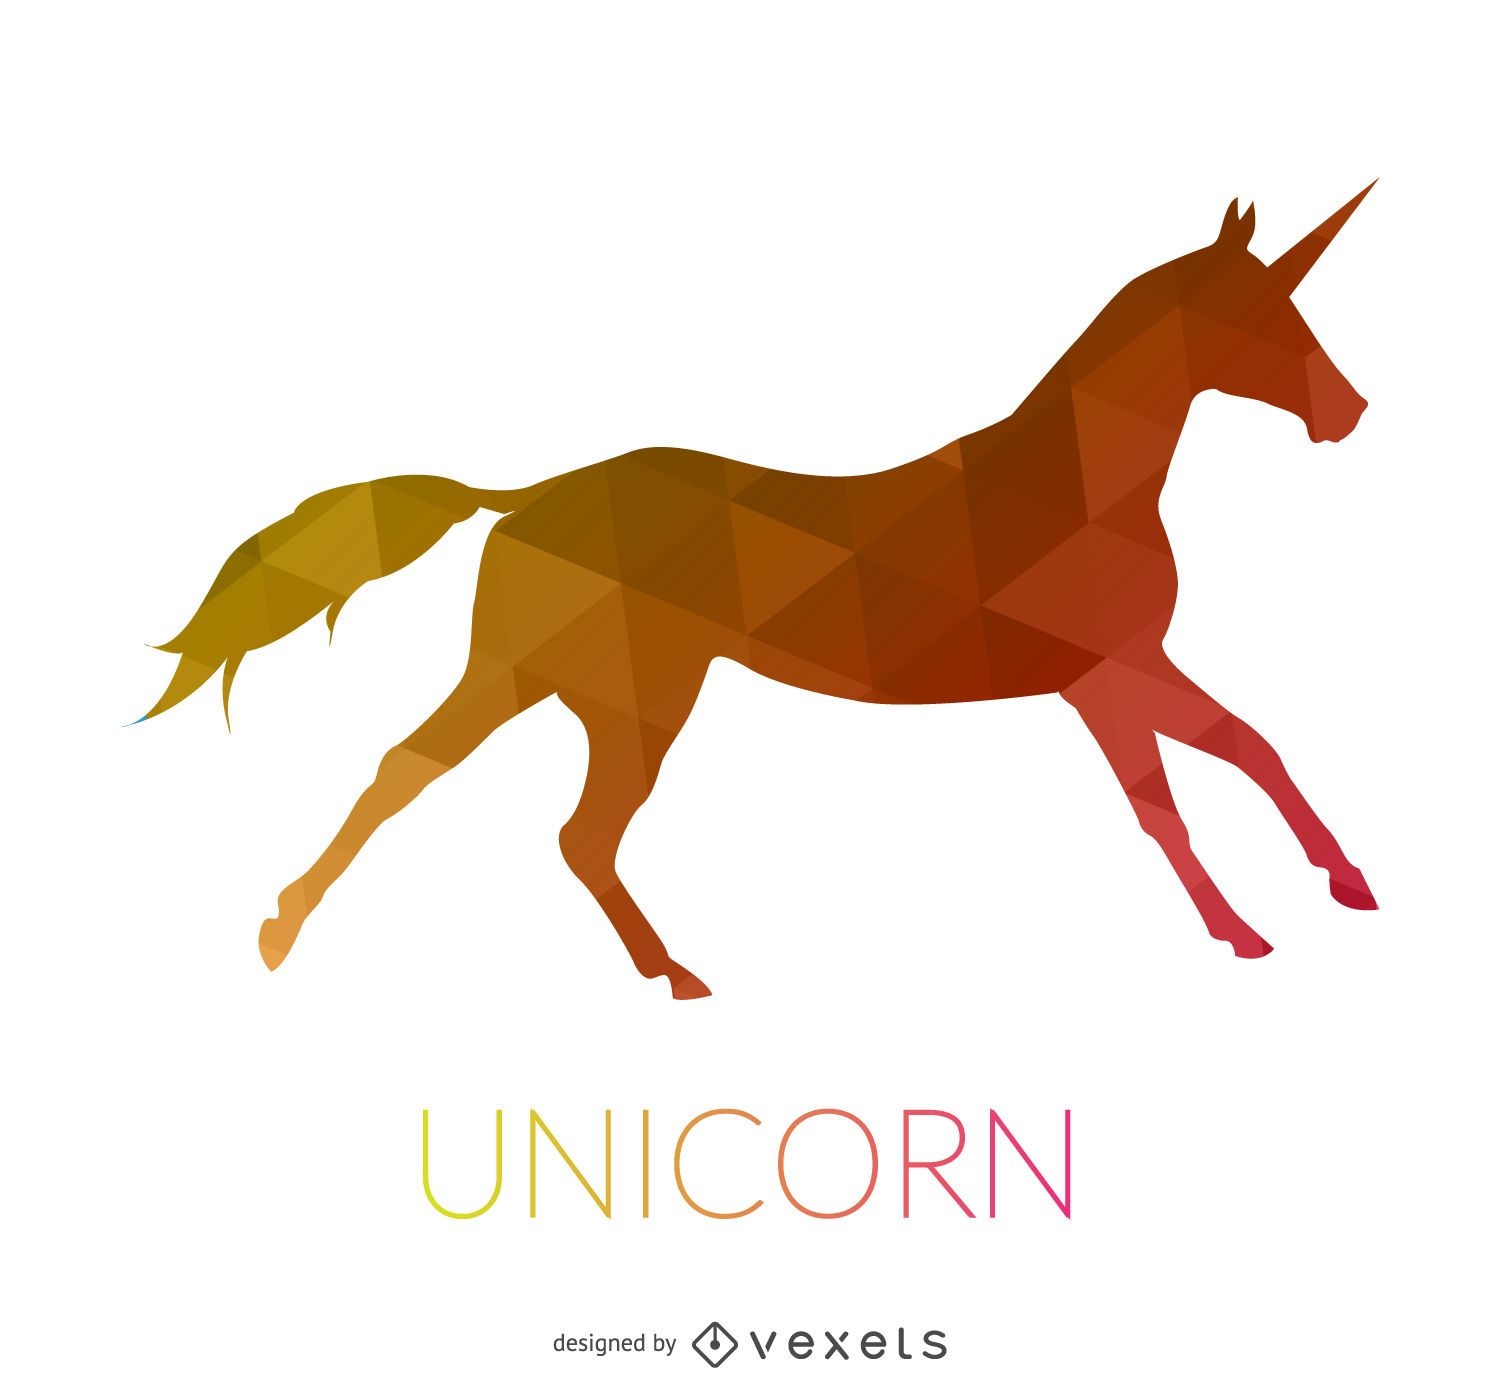 Running unicorn illustration